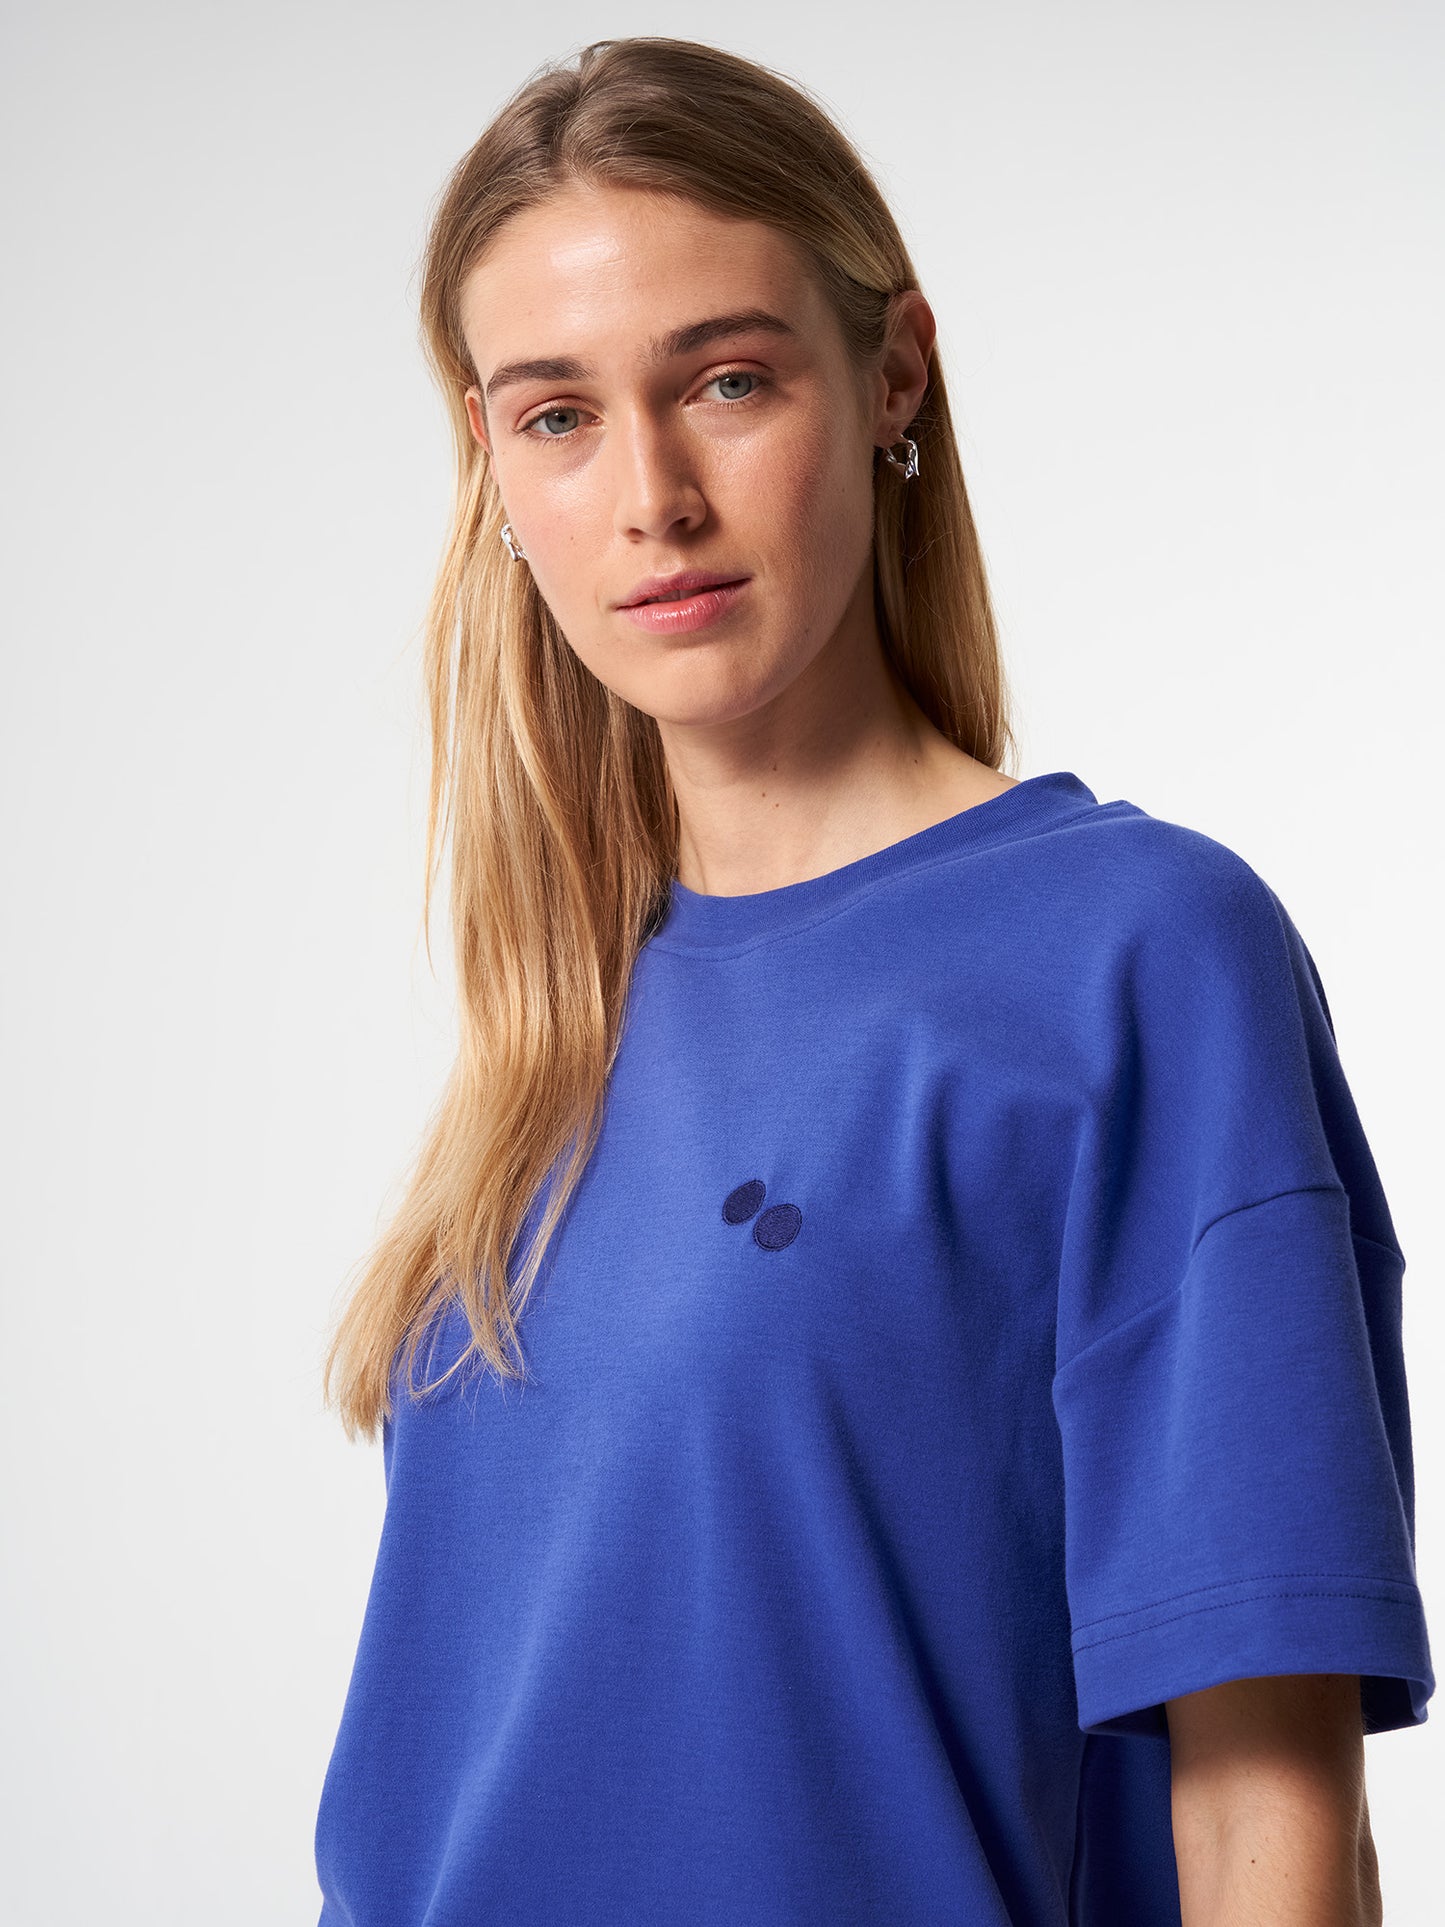 pinqponq-Tshirt-Unisex-Poppy-Blue-model-closeup-front